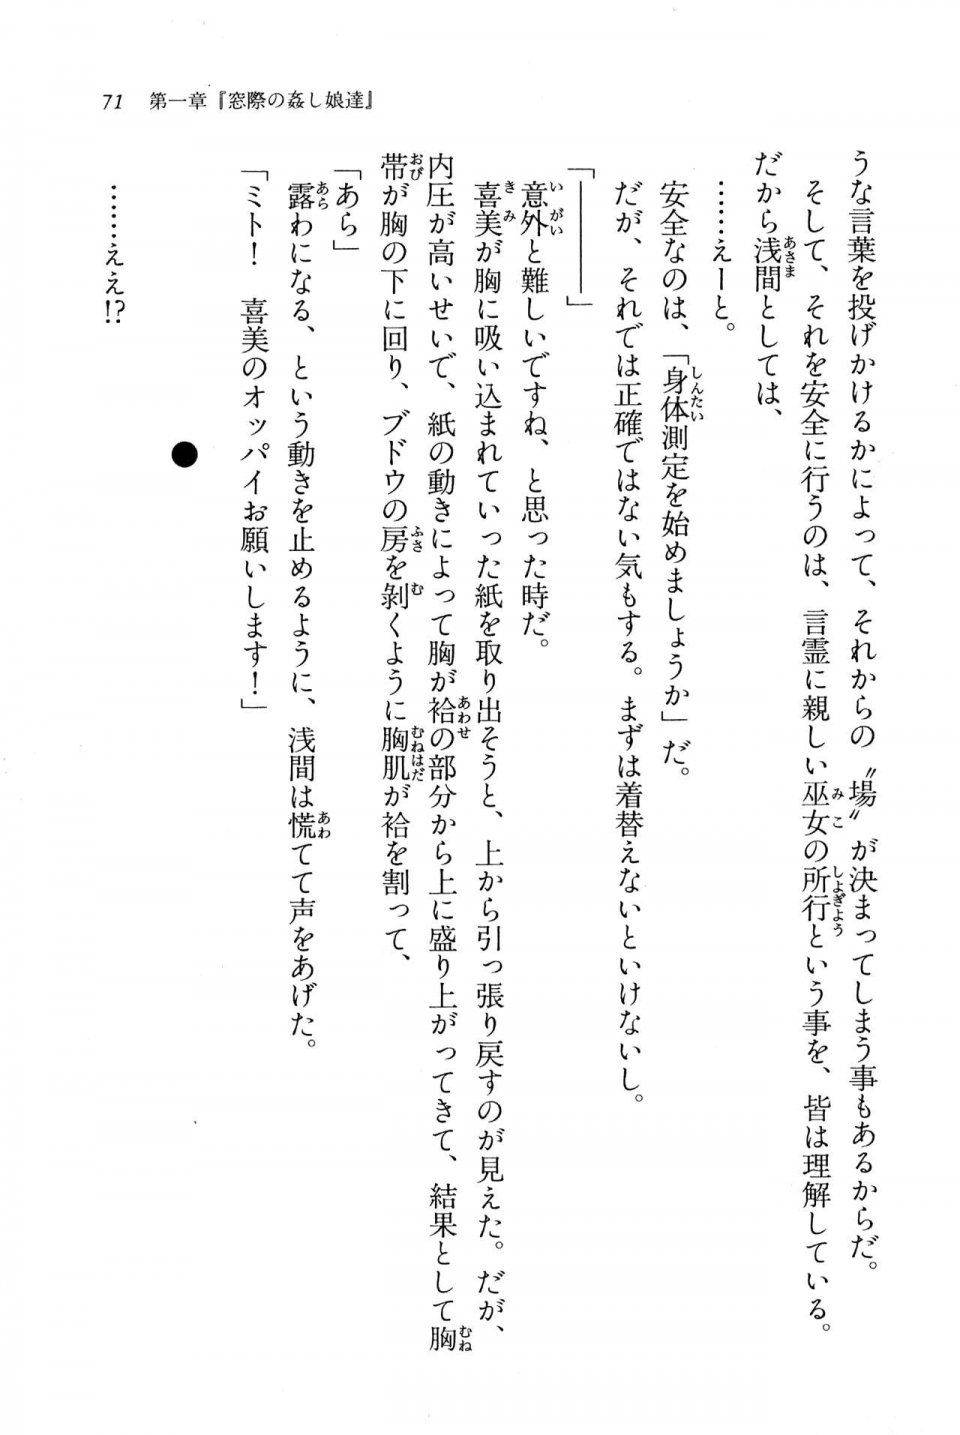 Kyoukai Senjou no Horizon BD Special Mininovel Vol 5(3A) - Photo #75